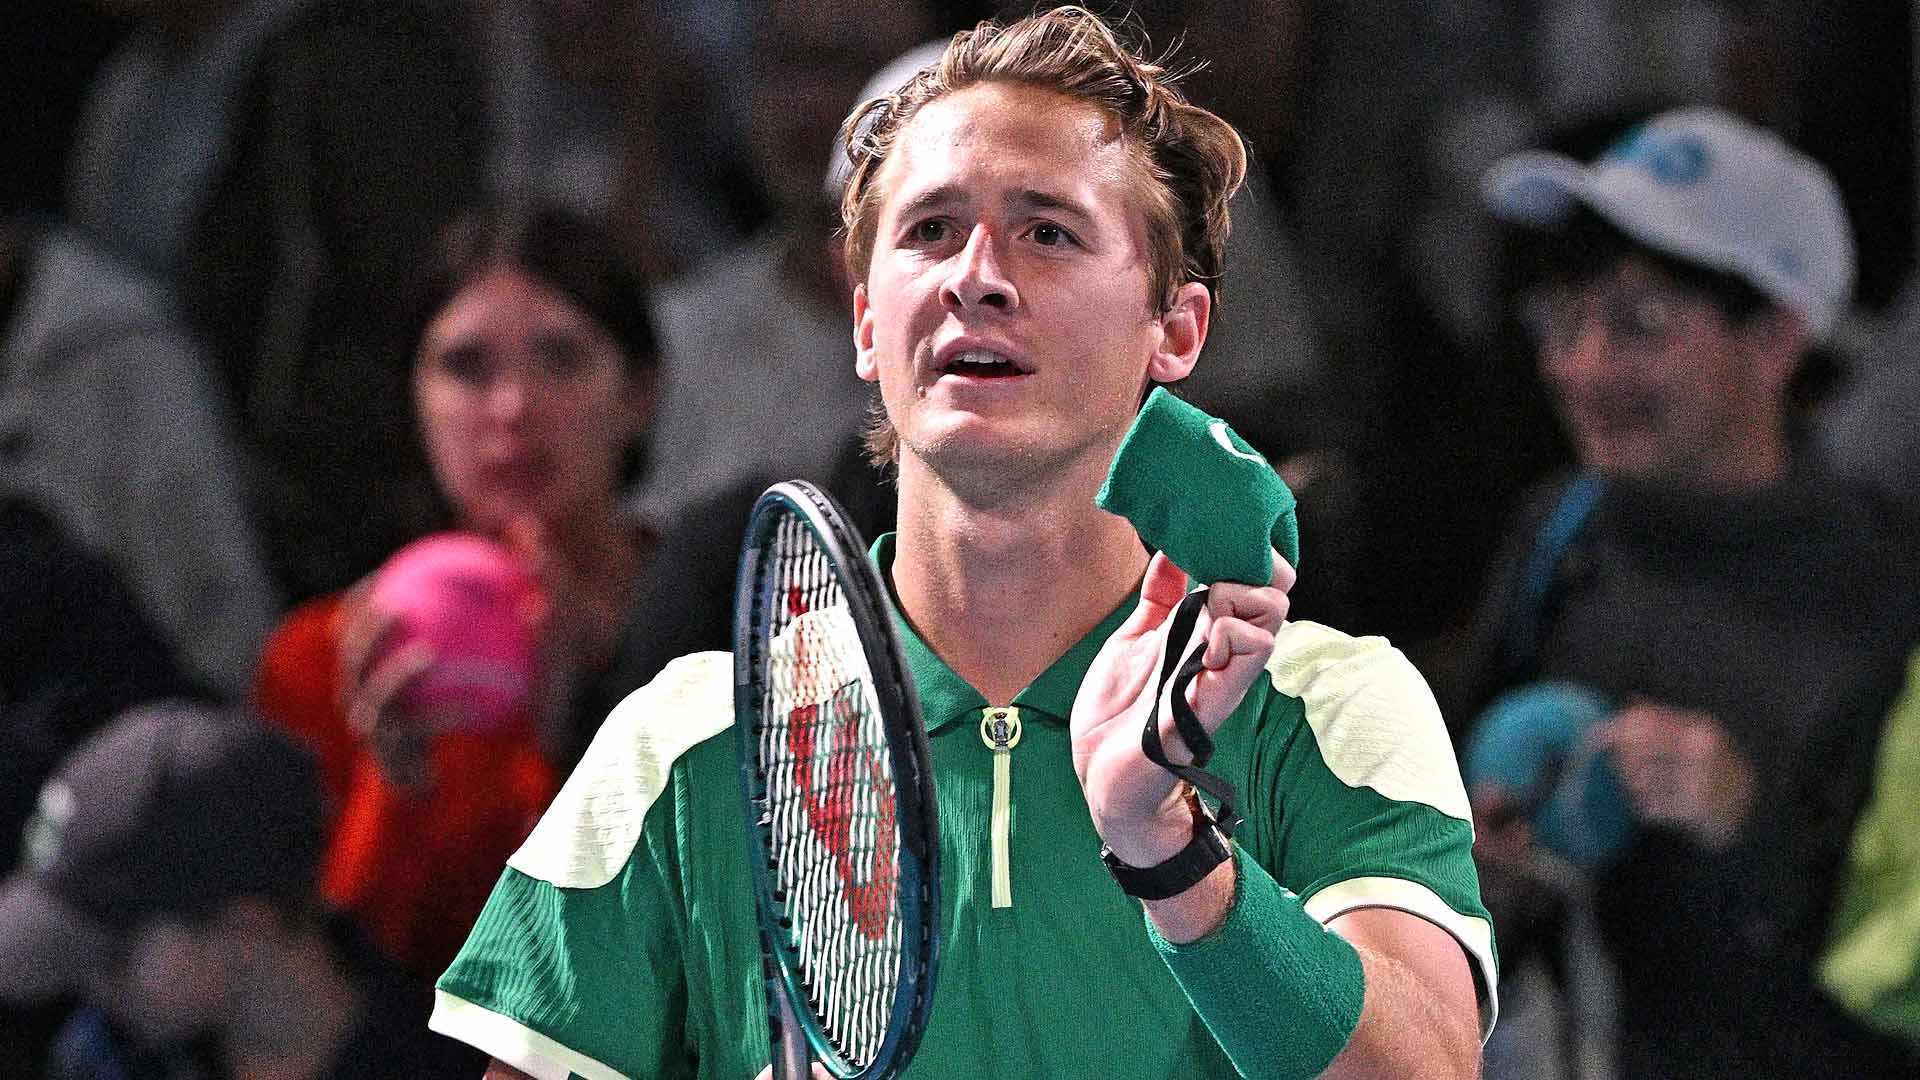 Sebastian Korda is the 29th seed at the Australian Open.